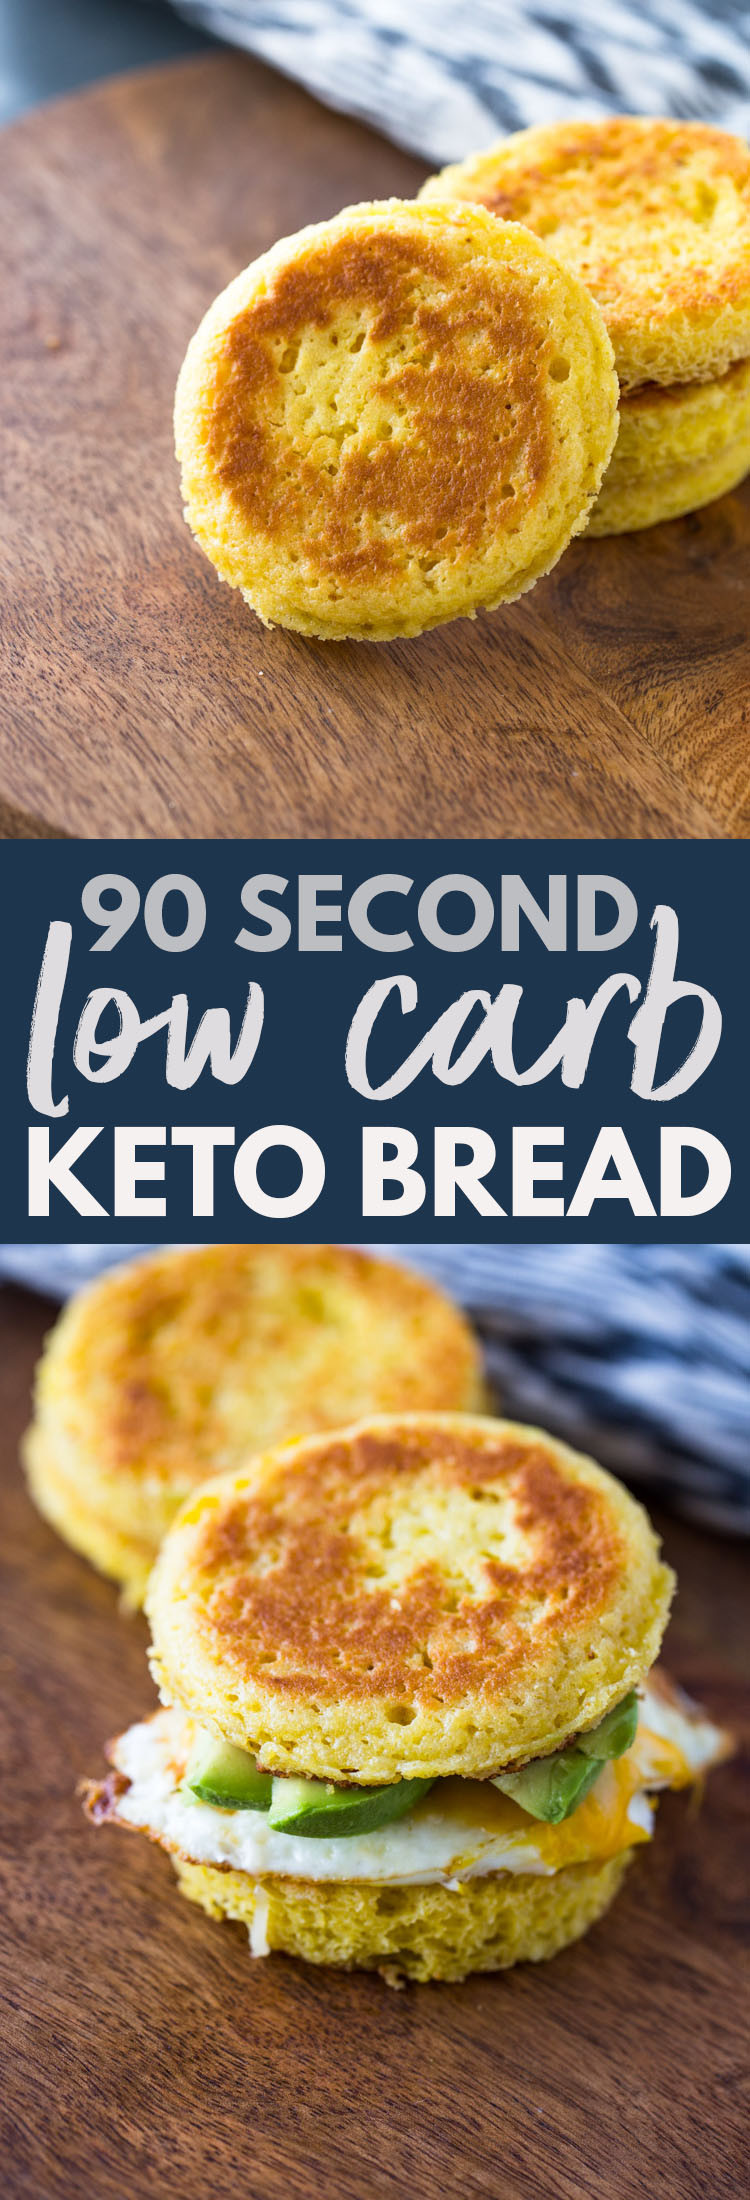 Microwave Keto Bread
 90 Second Microwavable Low Carb Keto Bread